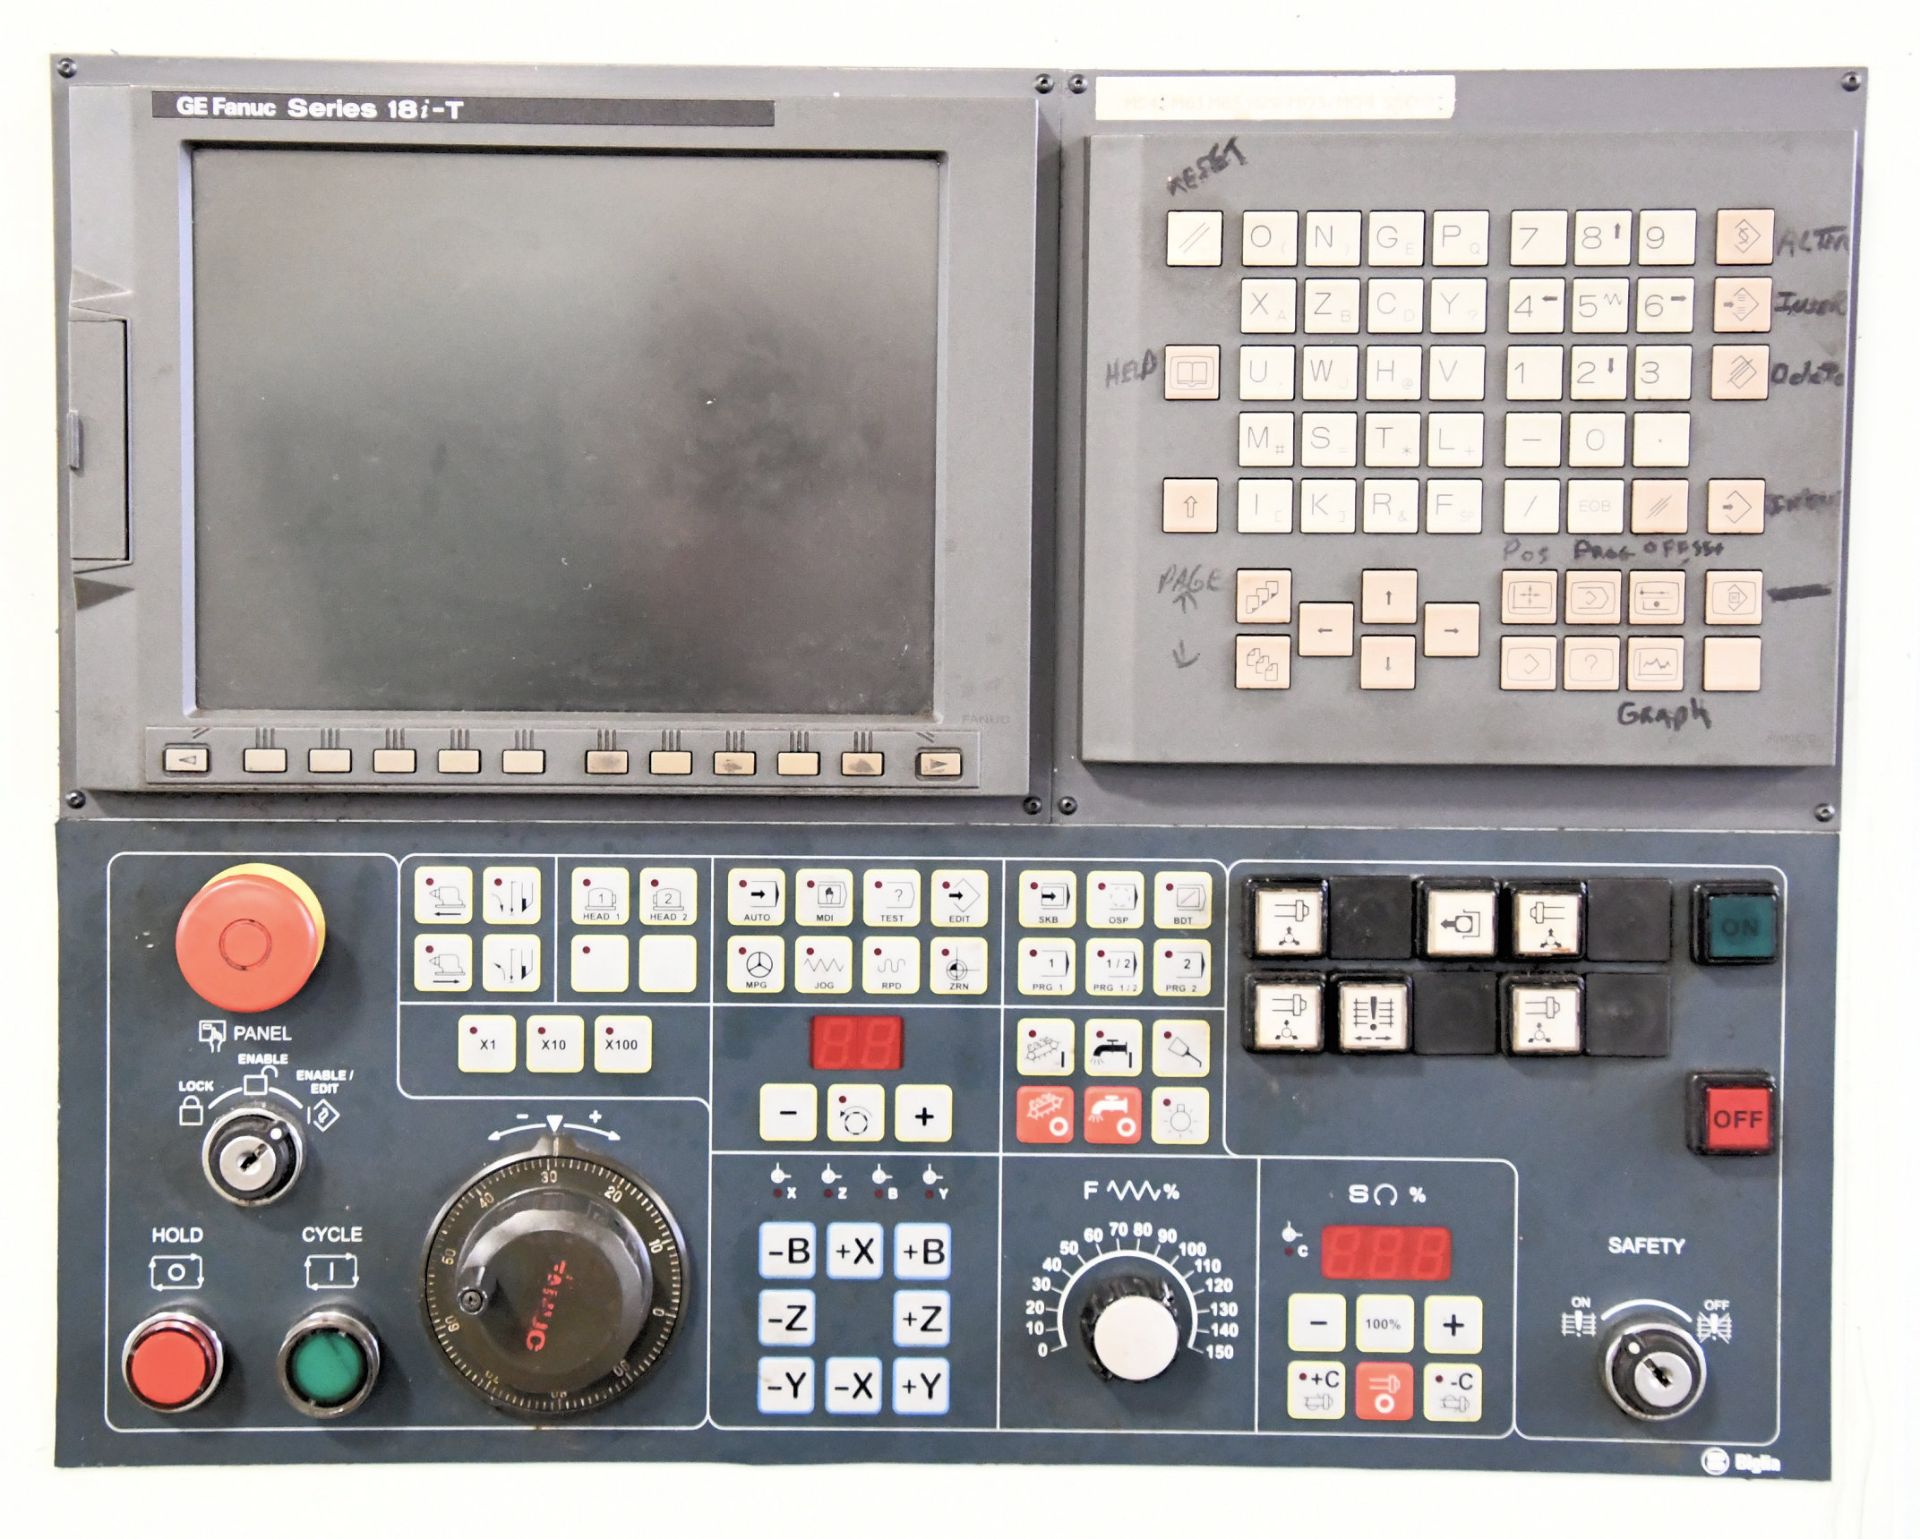 Biglia Multiflex Series B.501/S CNC Turning Center, S/n 5463 (1999), GE Fanuc Series - Image 4 of 9